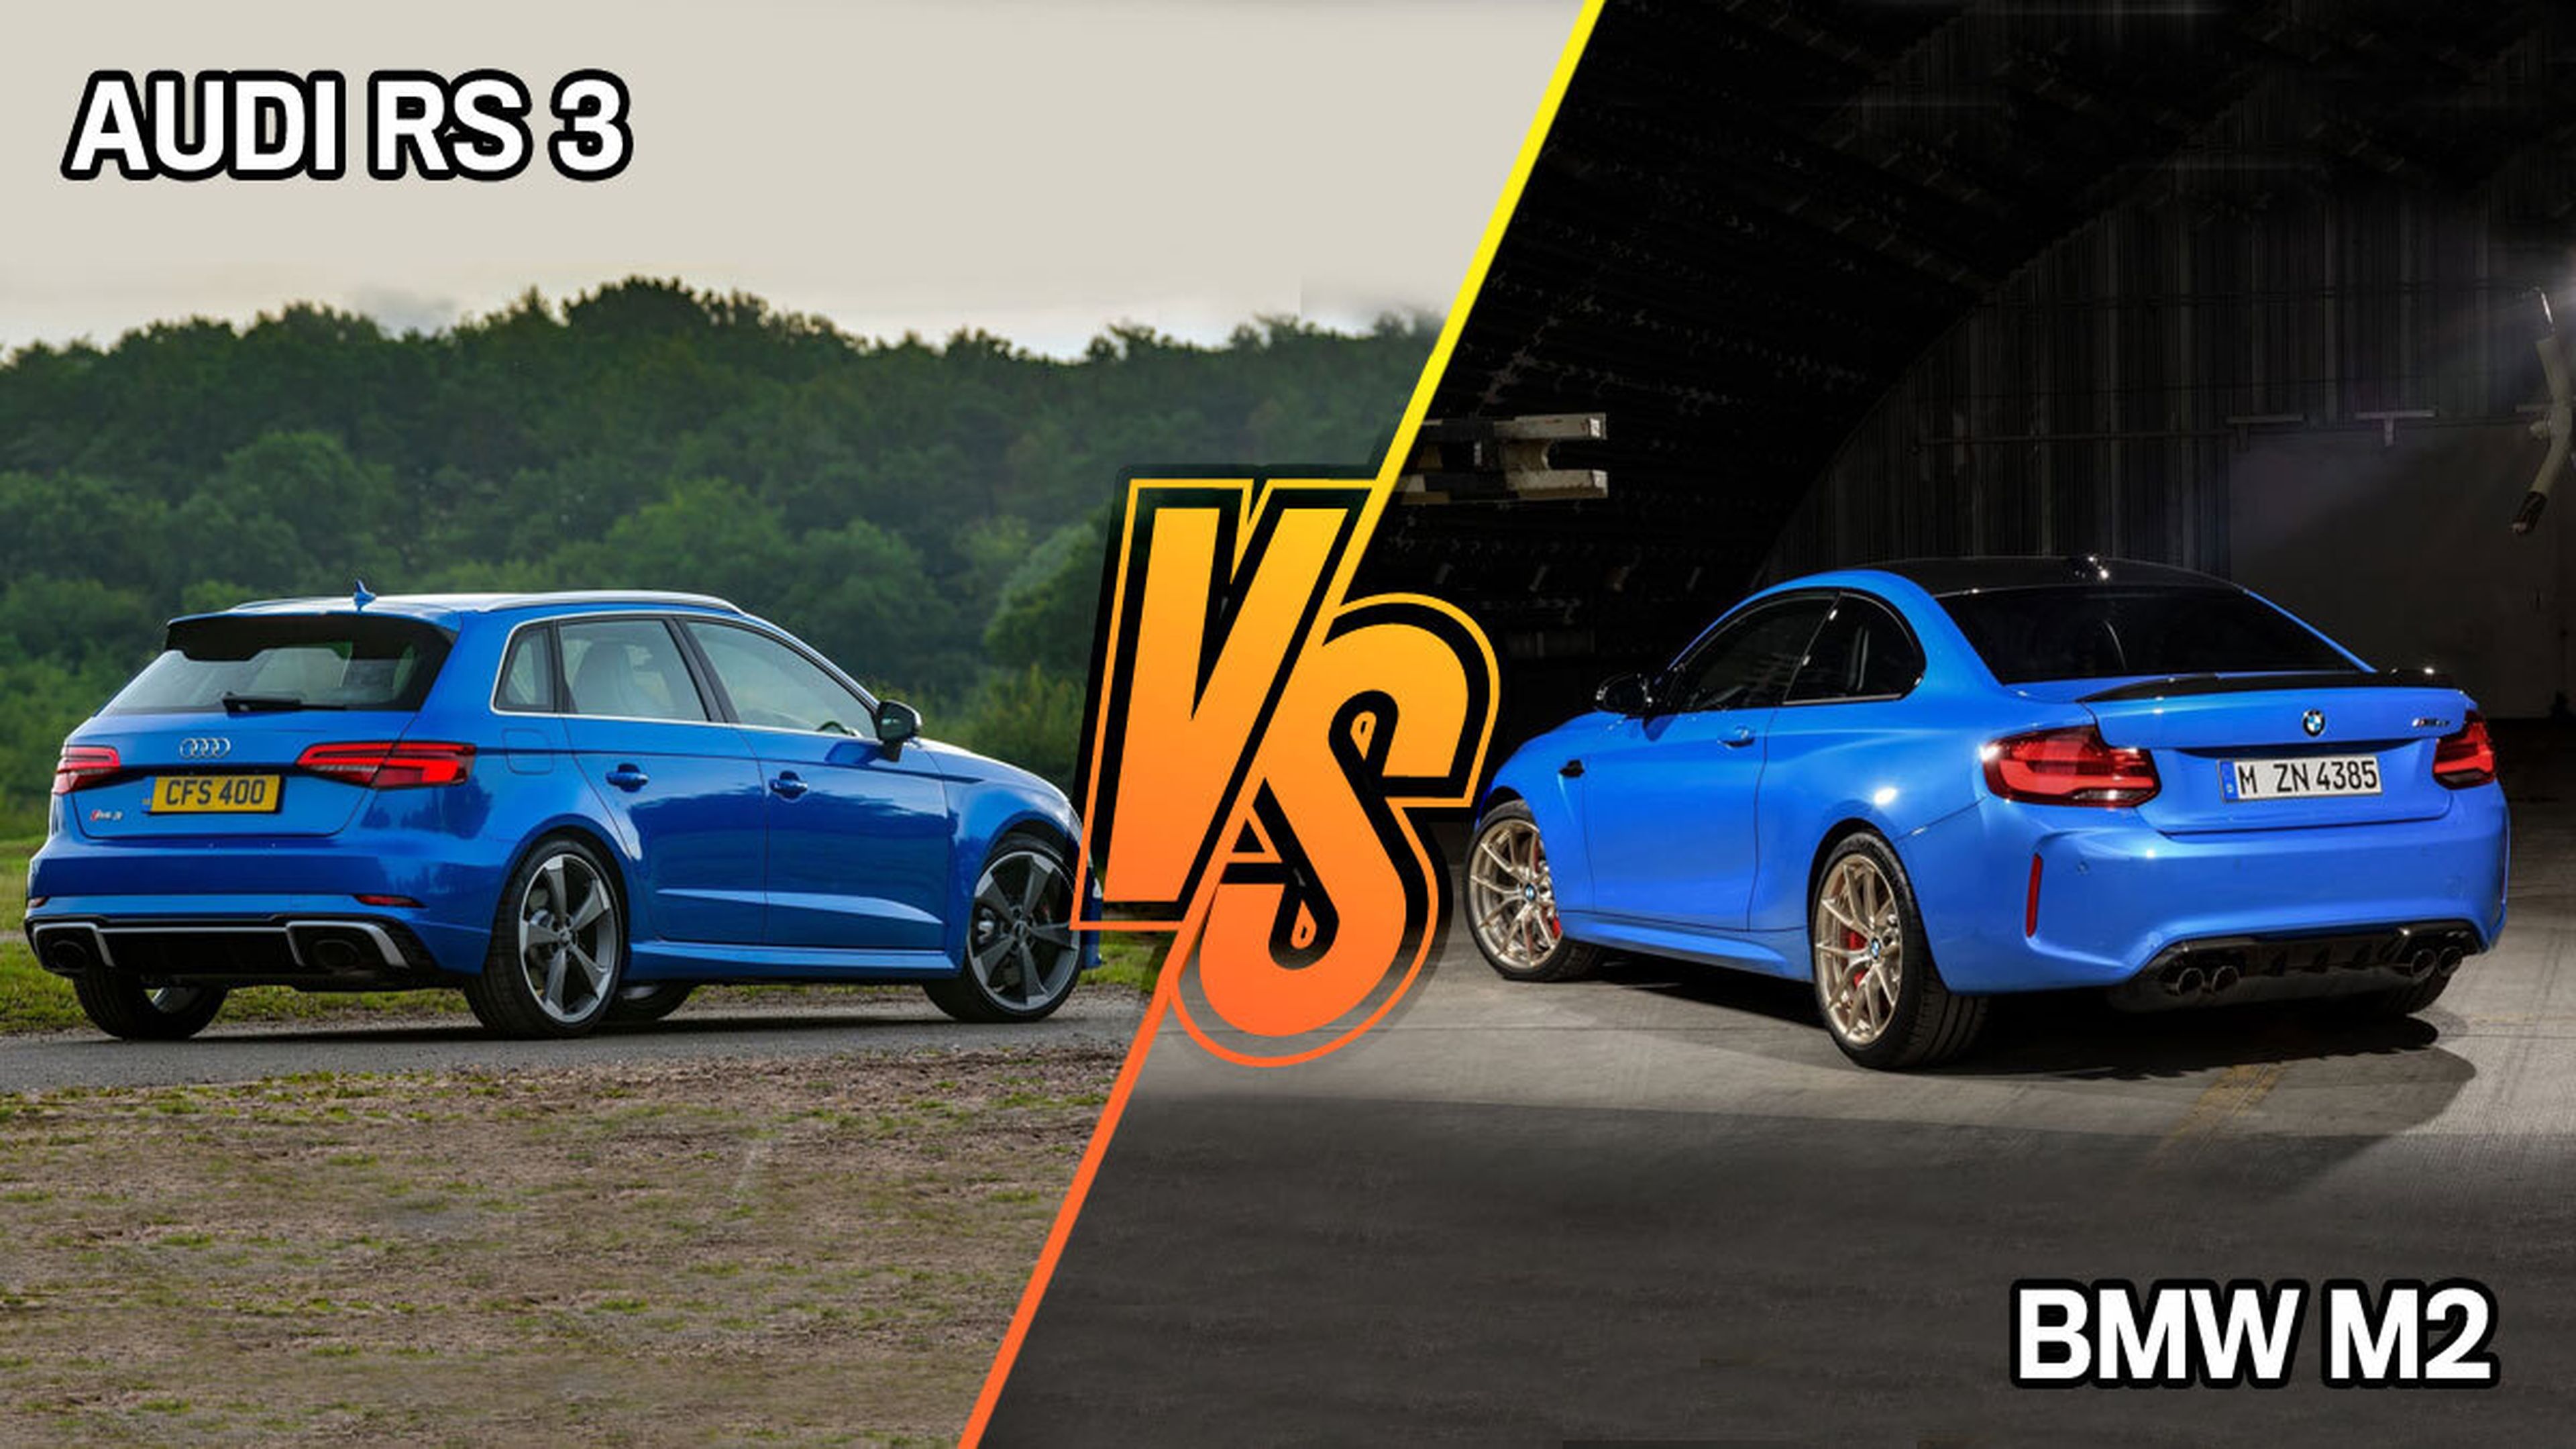 Audi RS 3 vs BMW M2